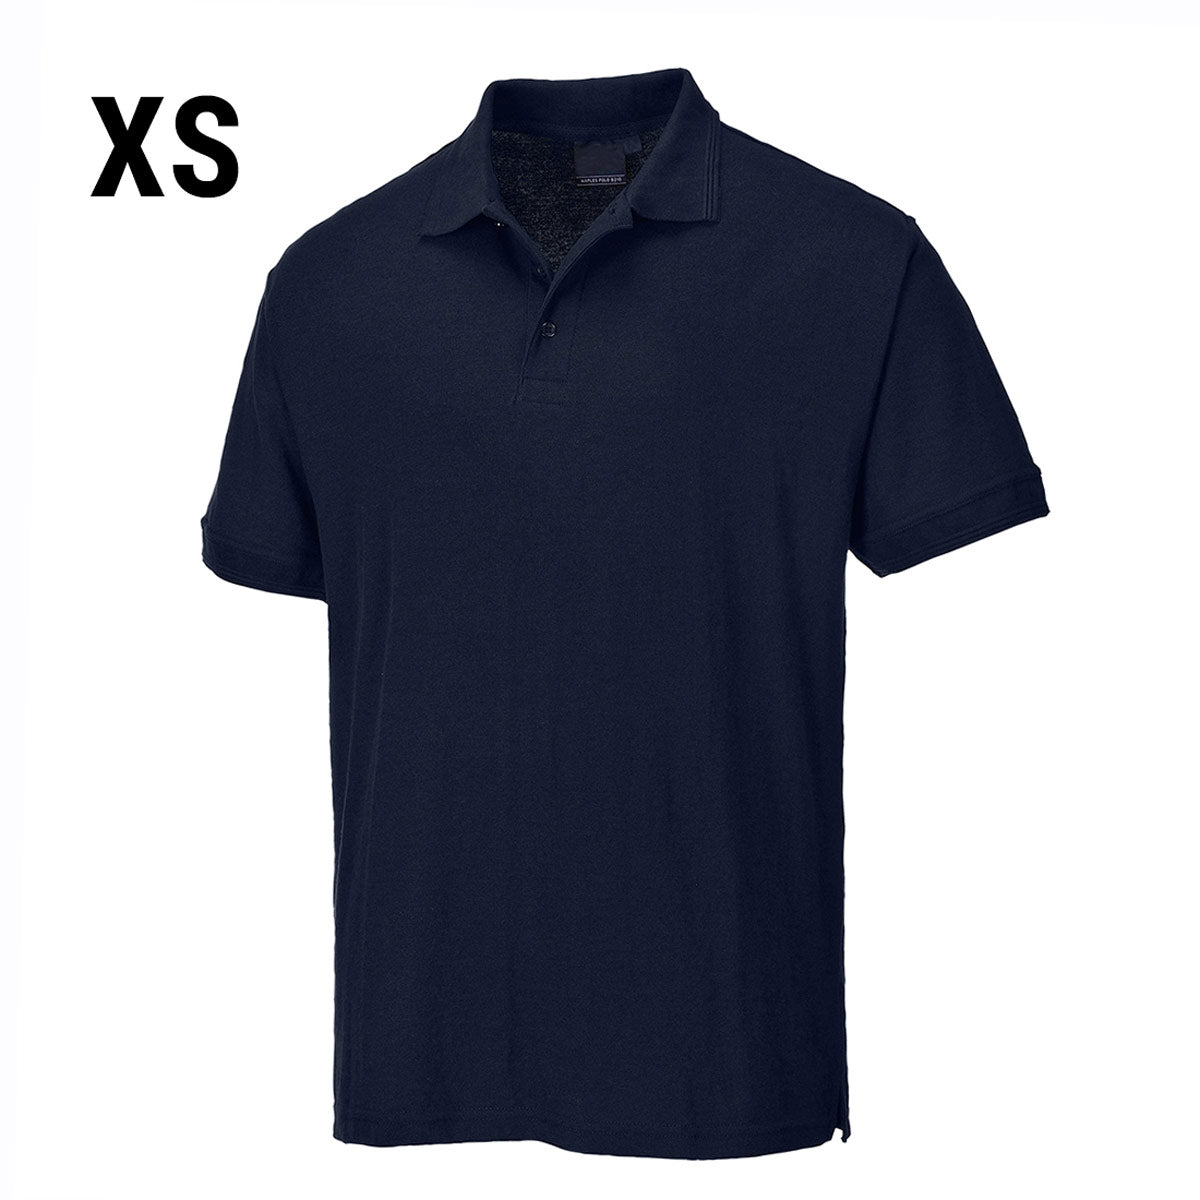 Poloskjorte til mænd - Dark Navy - Størrelse: XS